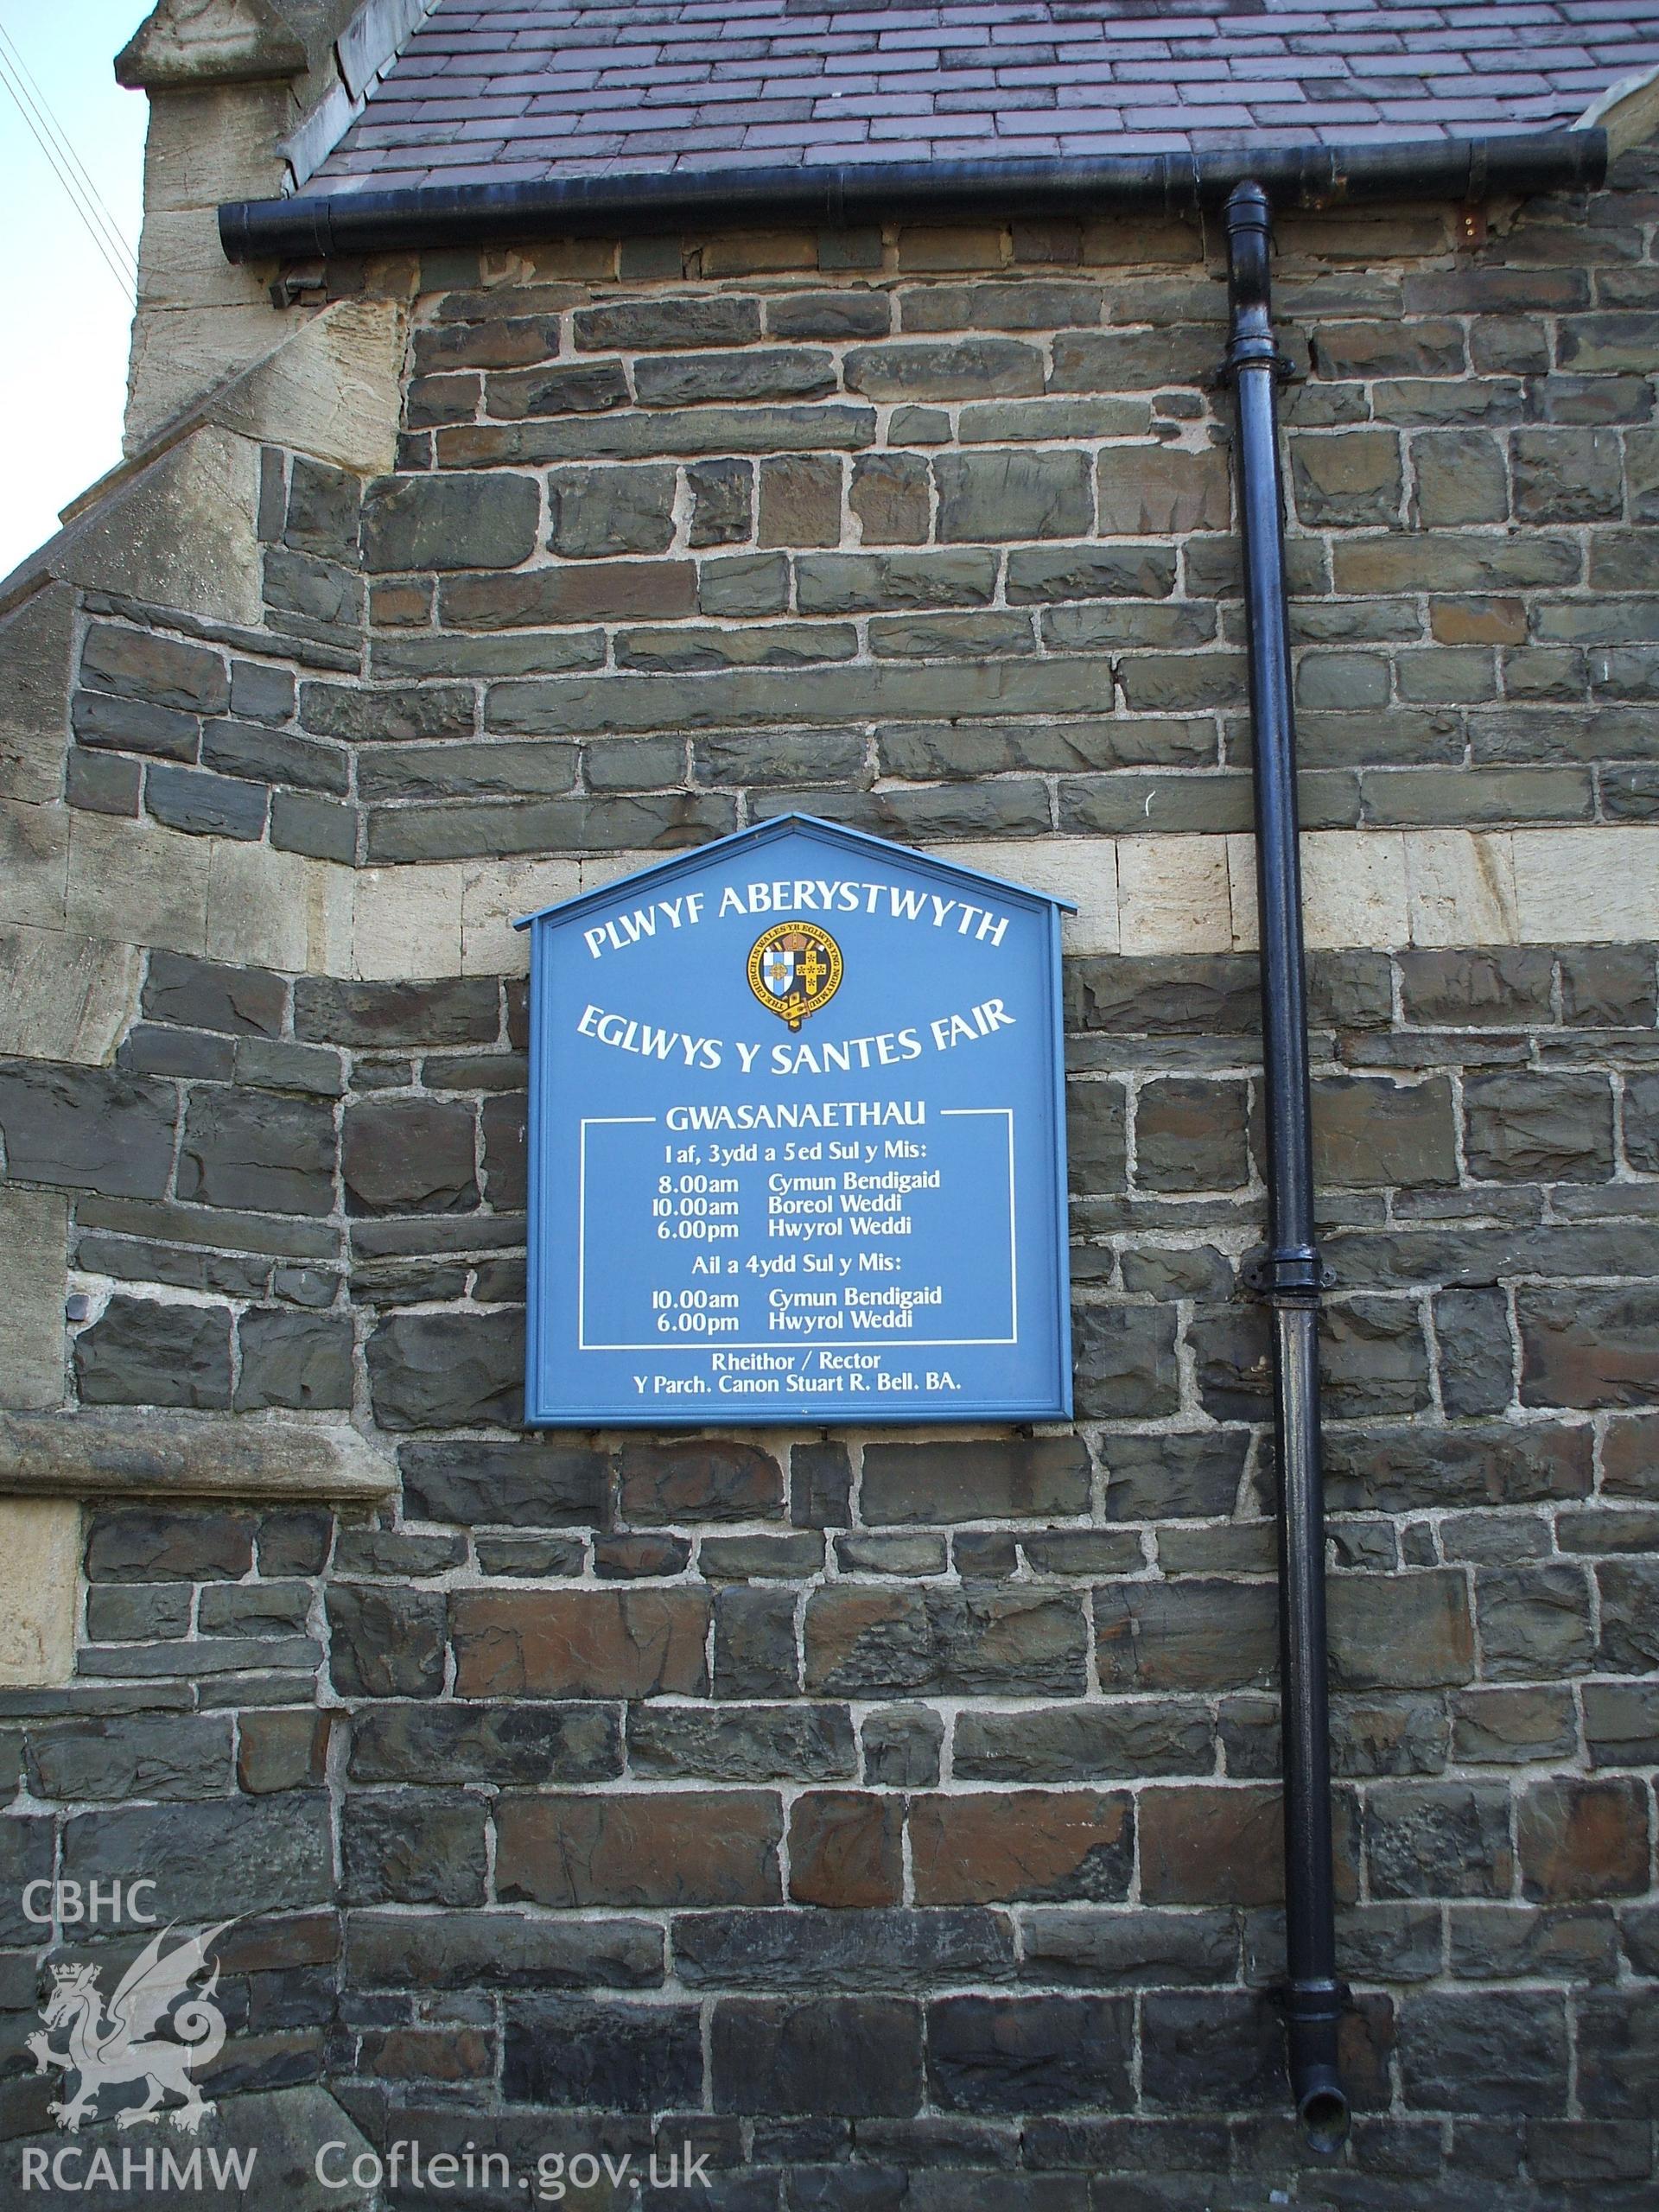 Colour digital photograph showing a sign on the wall of St. Mary's Church, Aberystwyth. The sign is entitled, "Plwyf Aberystwyth, Eglwys y Santes fair."